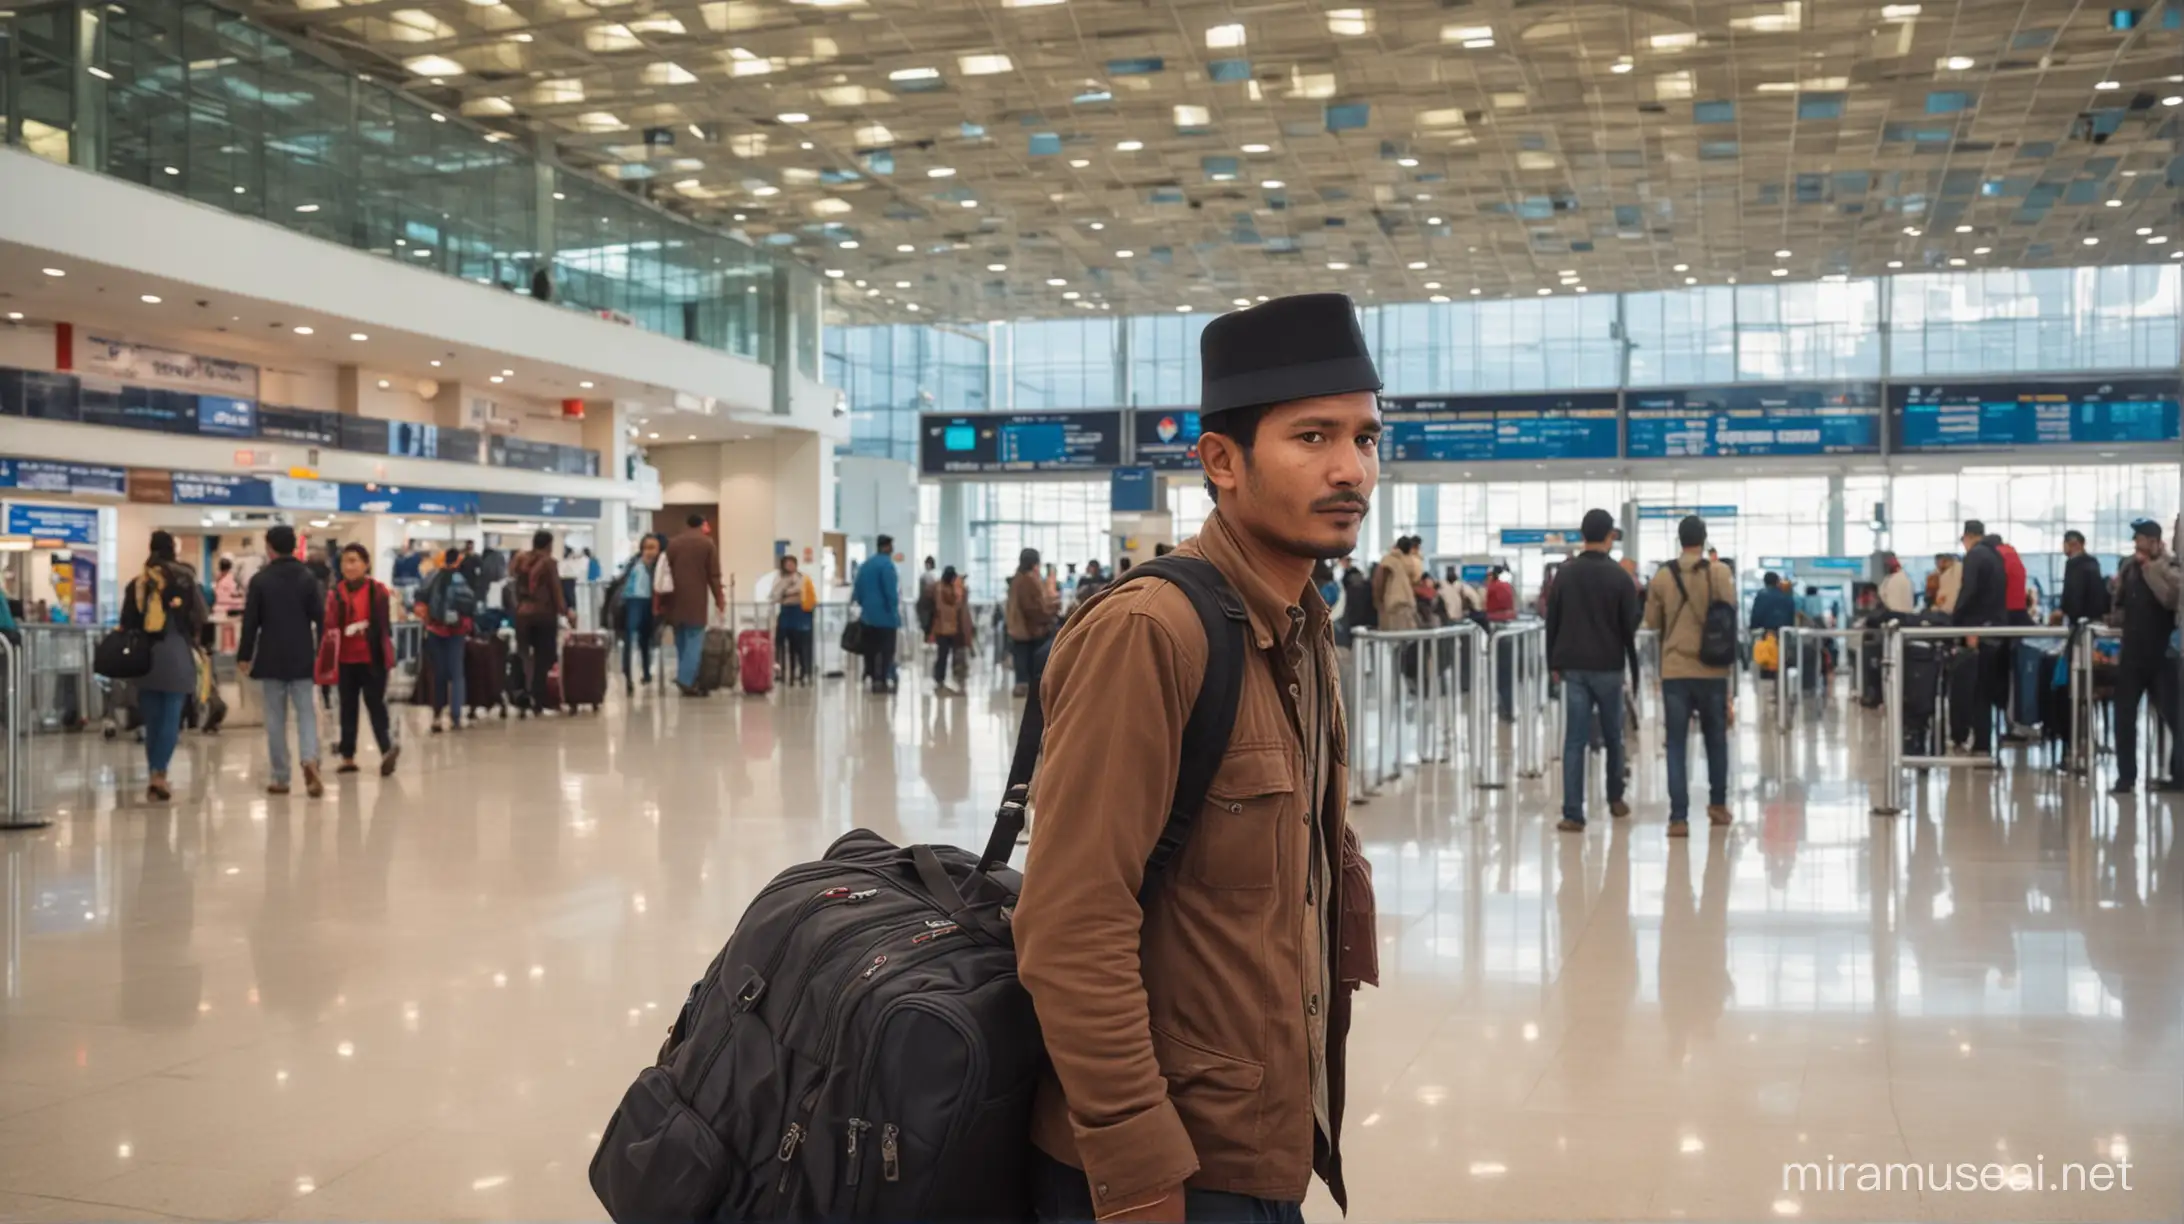 Sad Nepali Man Wearing Dhaka Topi in Nepal Airport Holding Luggage